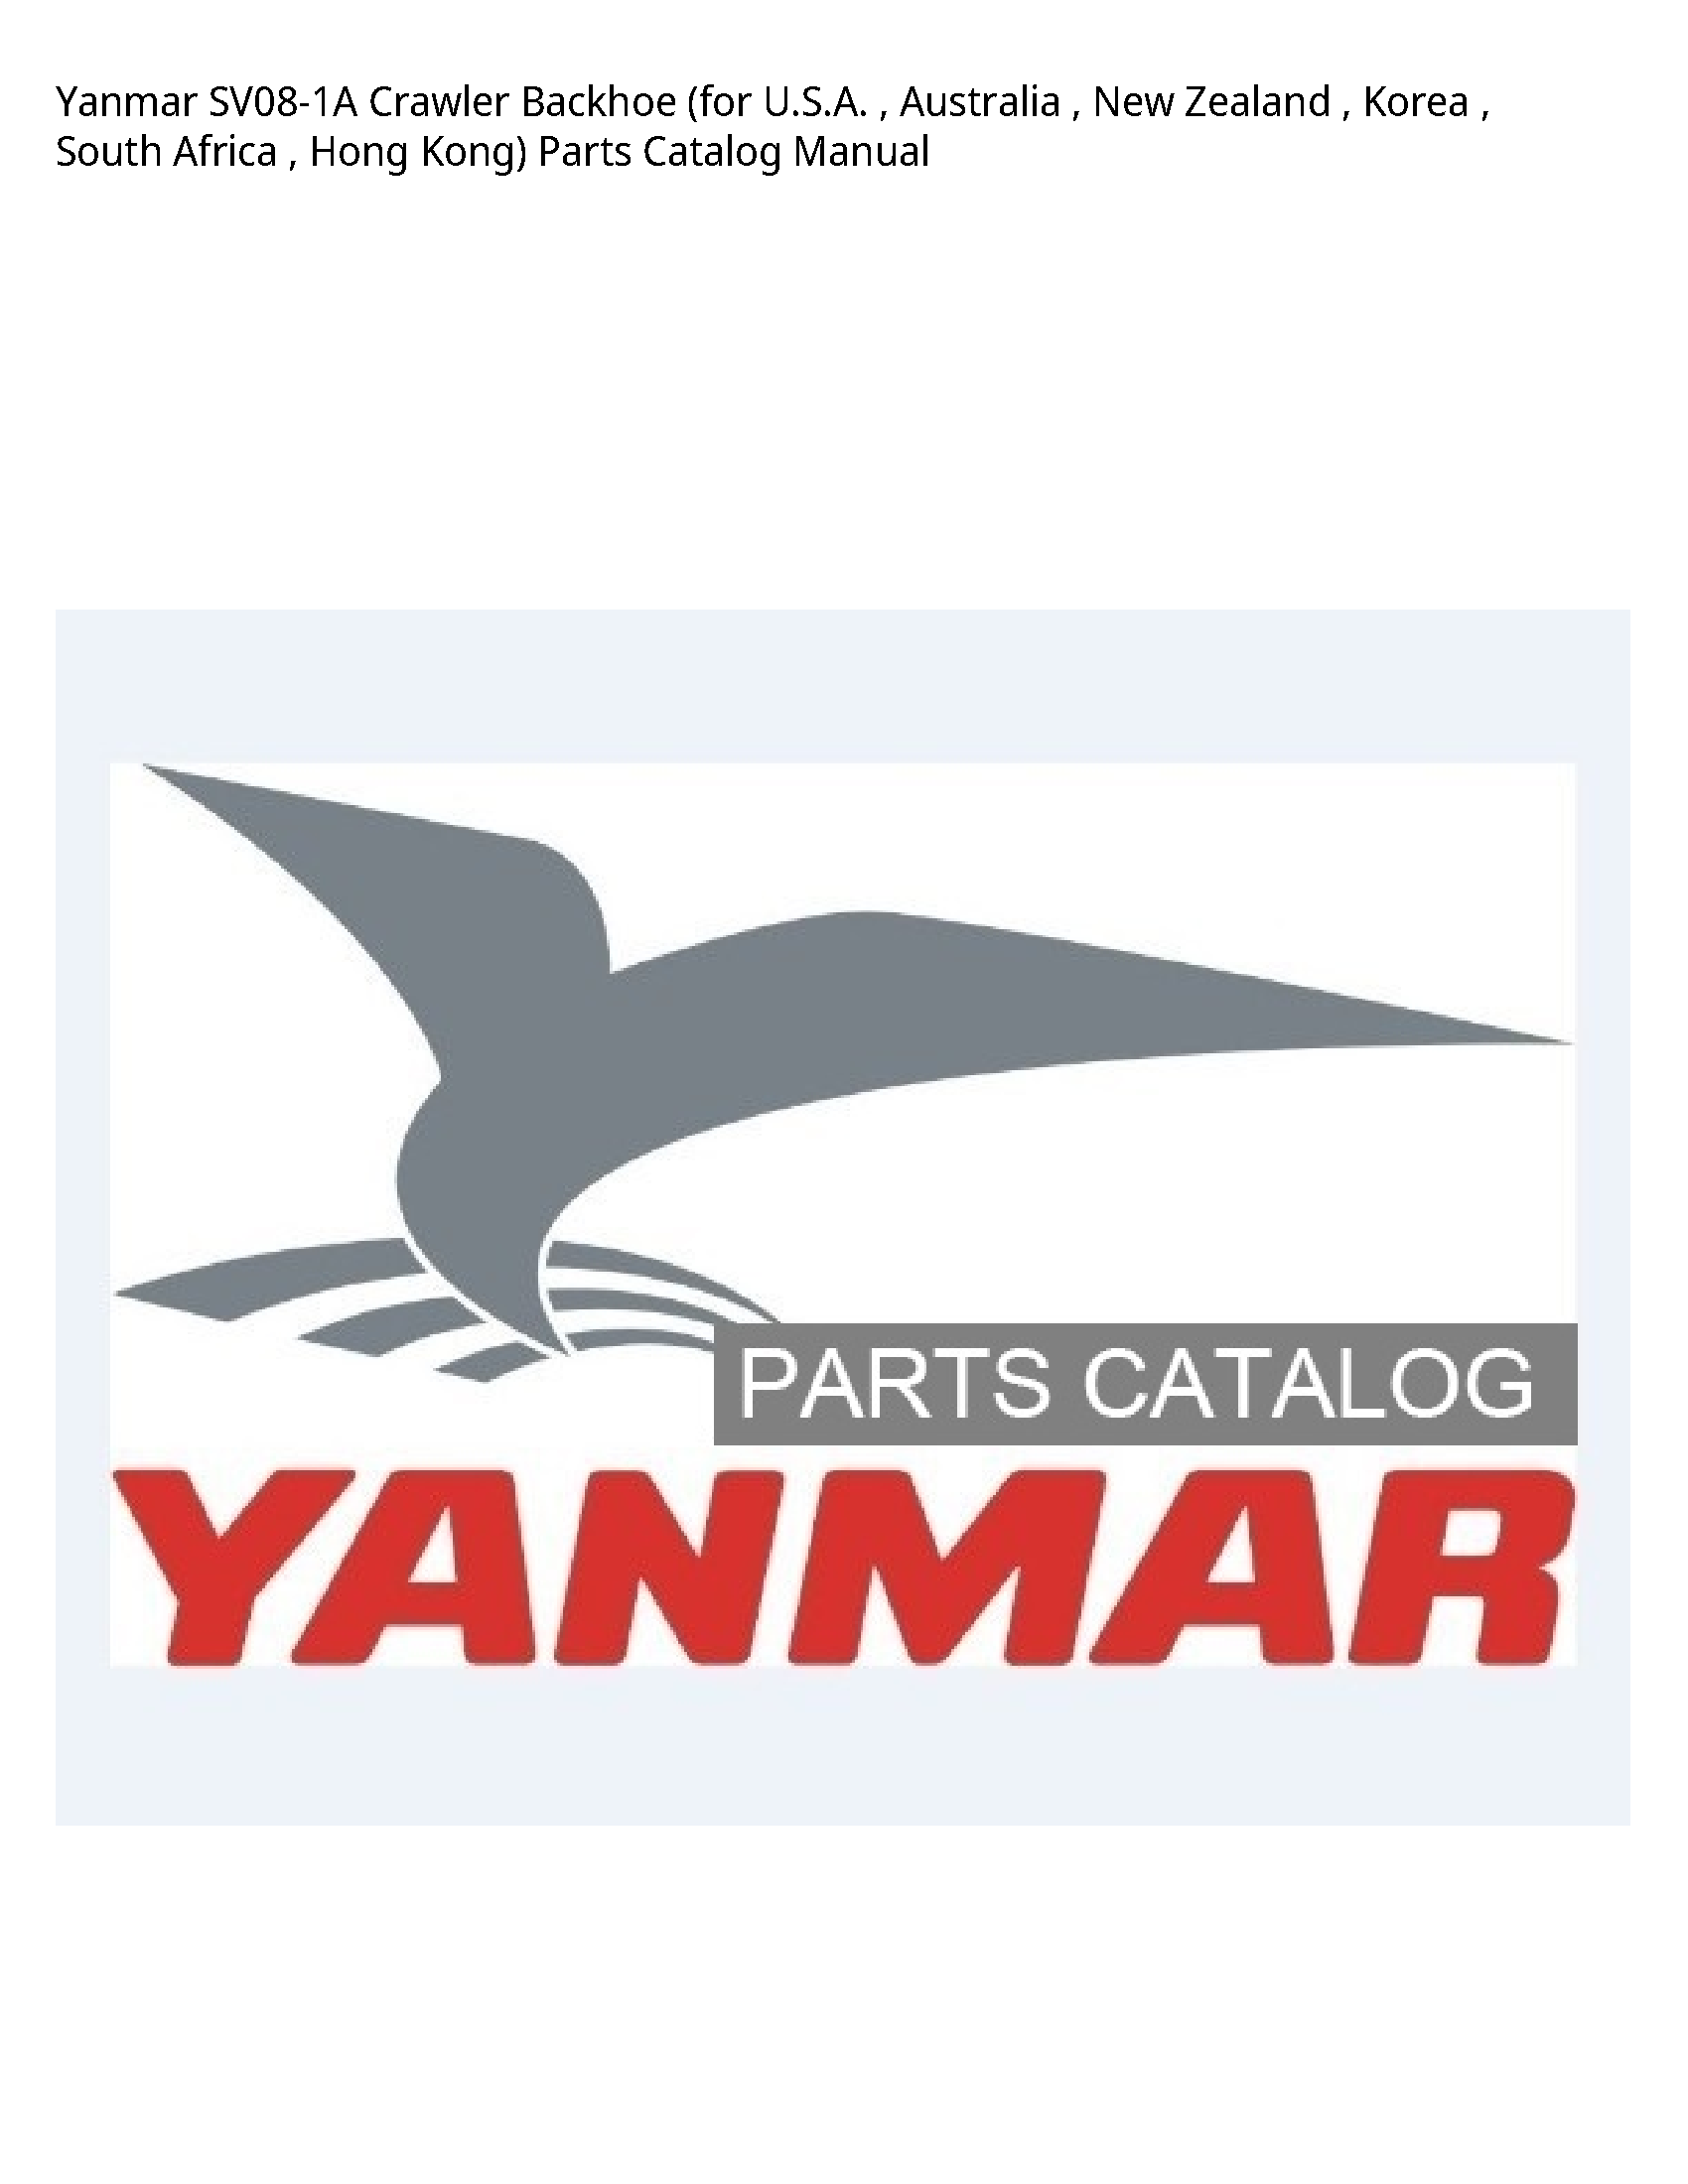 Yanmar SV08-1A Crawler Backhoe (for U.S.A. Australia New Zealand Korea South Africa Hong Kong) Parts Catalog manual